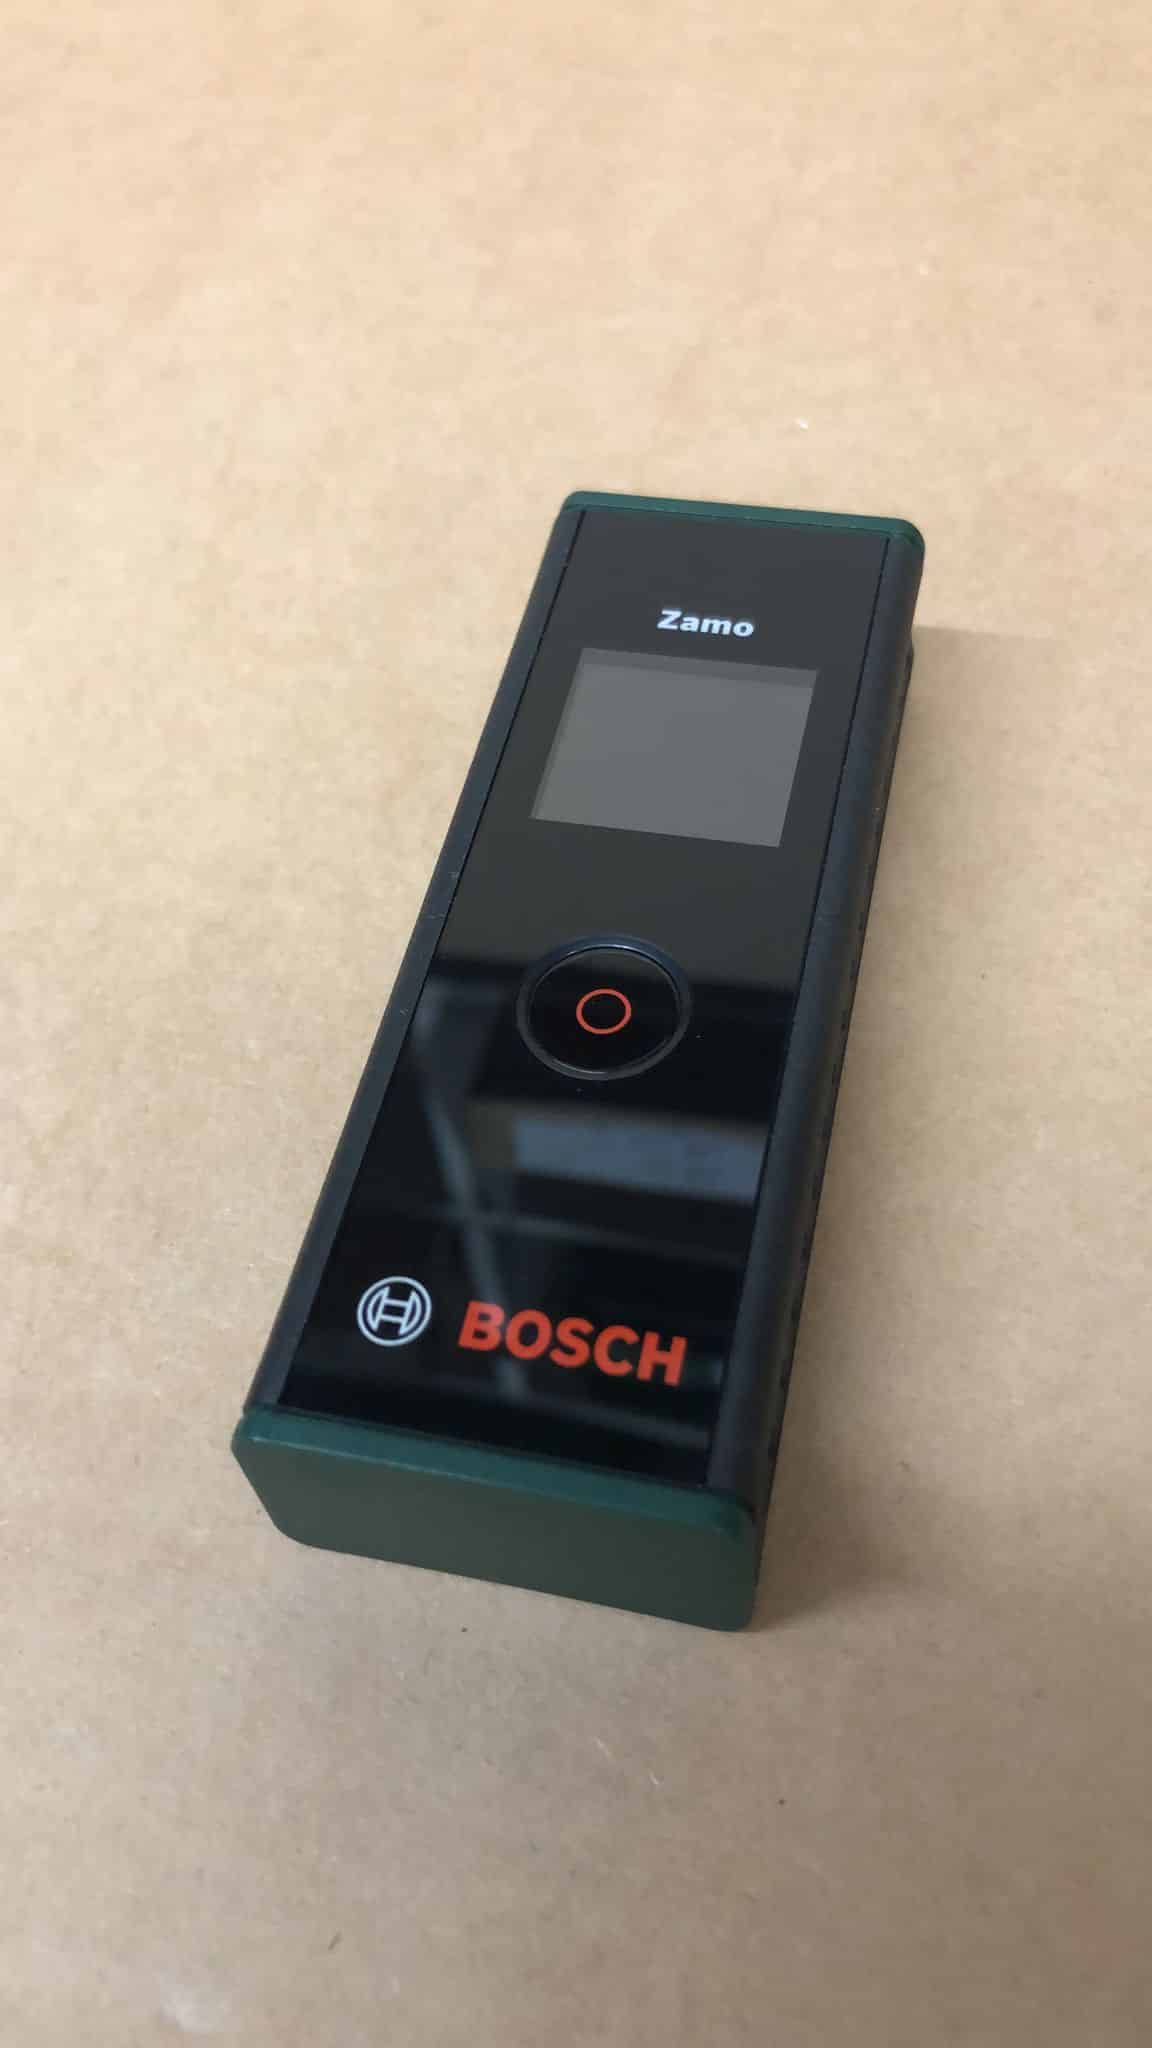 Bosch 0603672702 NEW Zamo 3rd Generation Area Laser Measure 1.5V Black & Green 1213